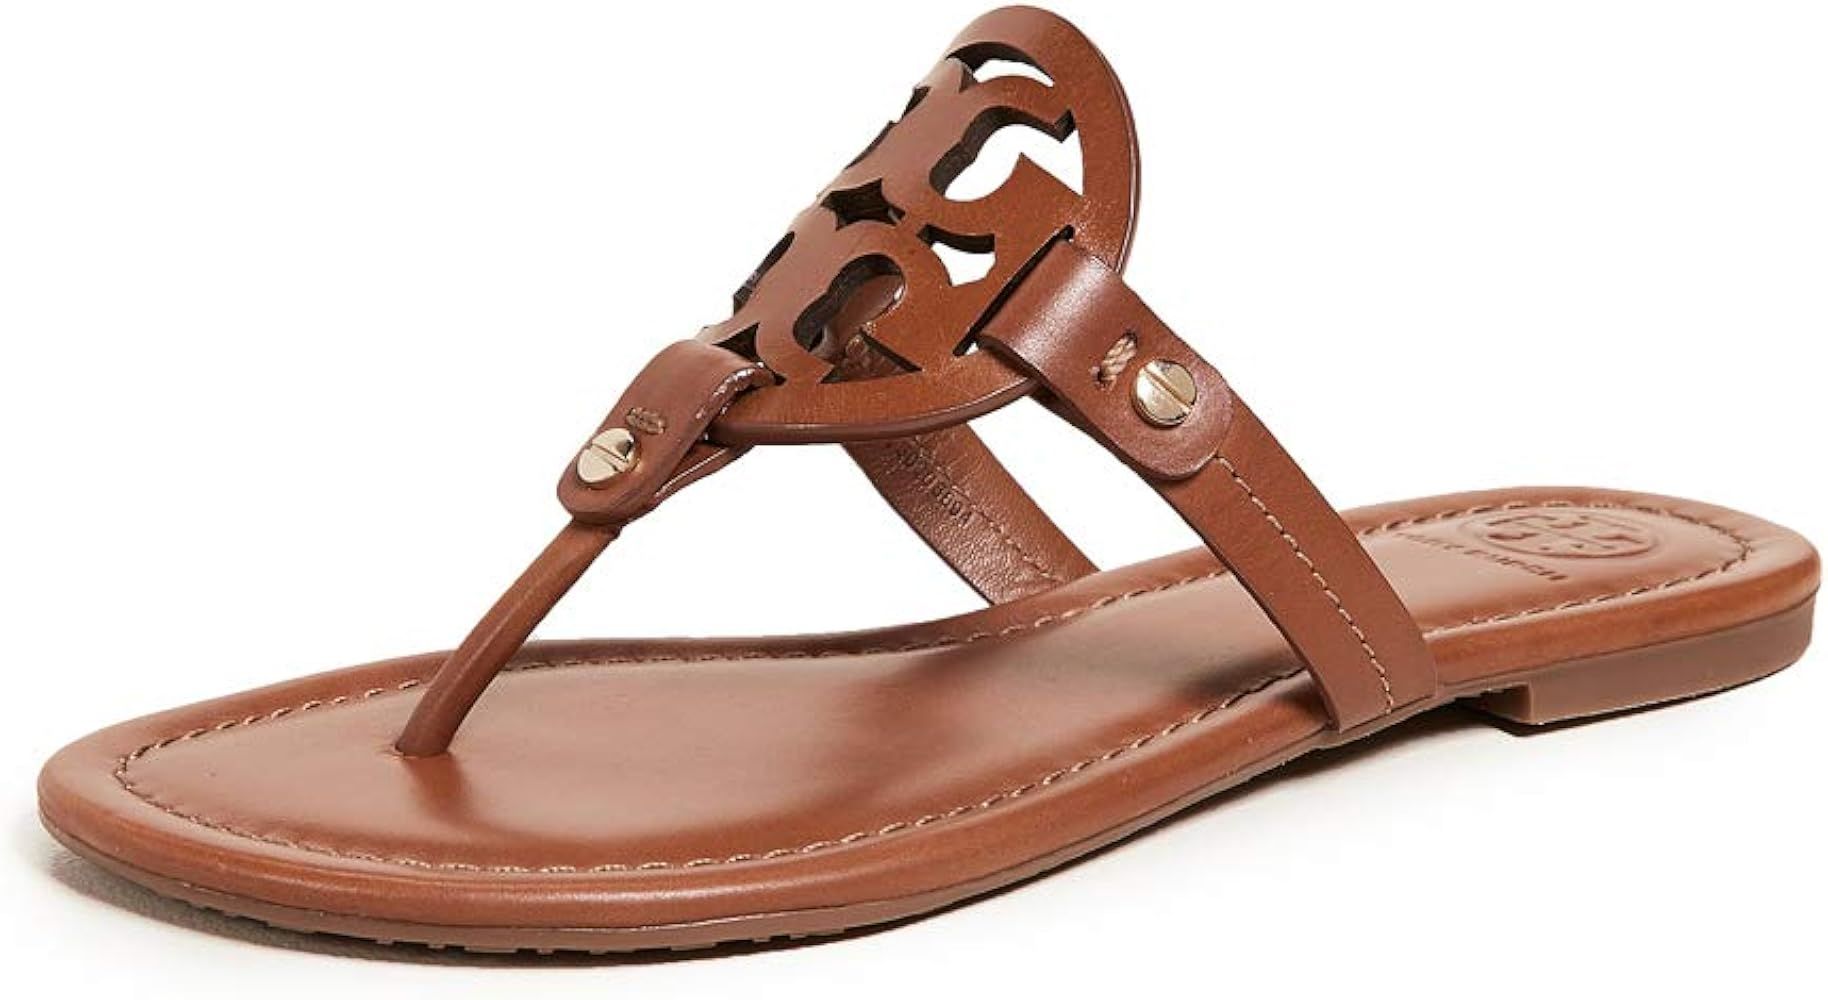 Women's Miller Thong Sandals | Amazon (US)